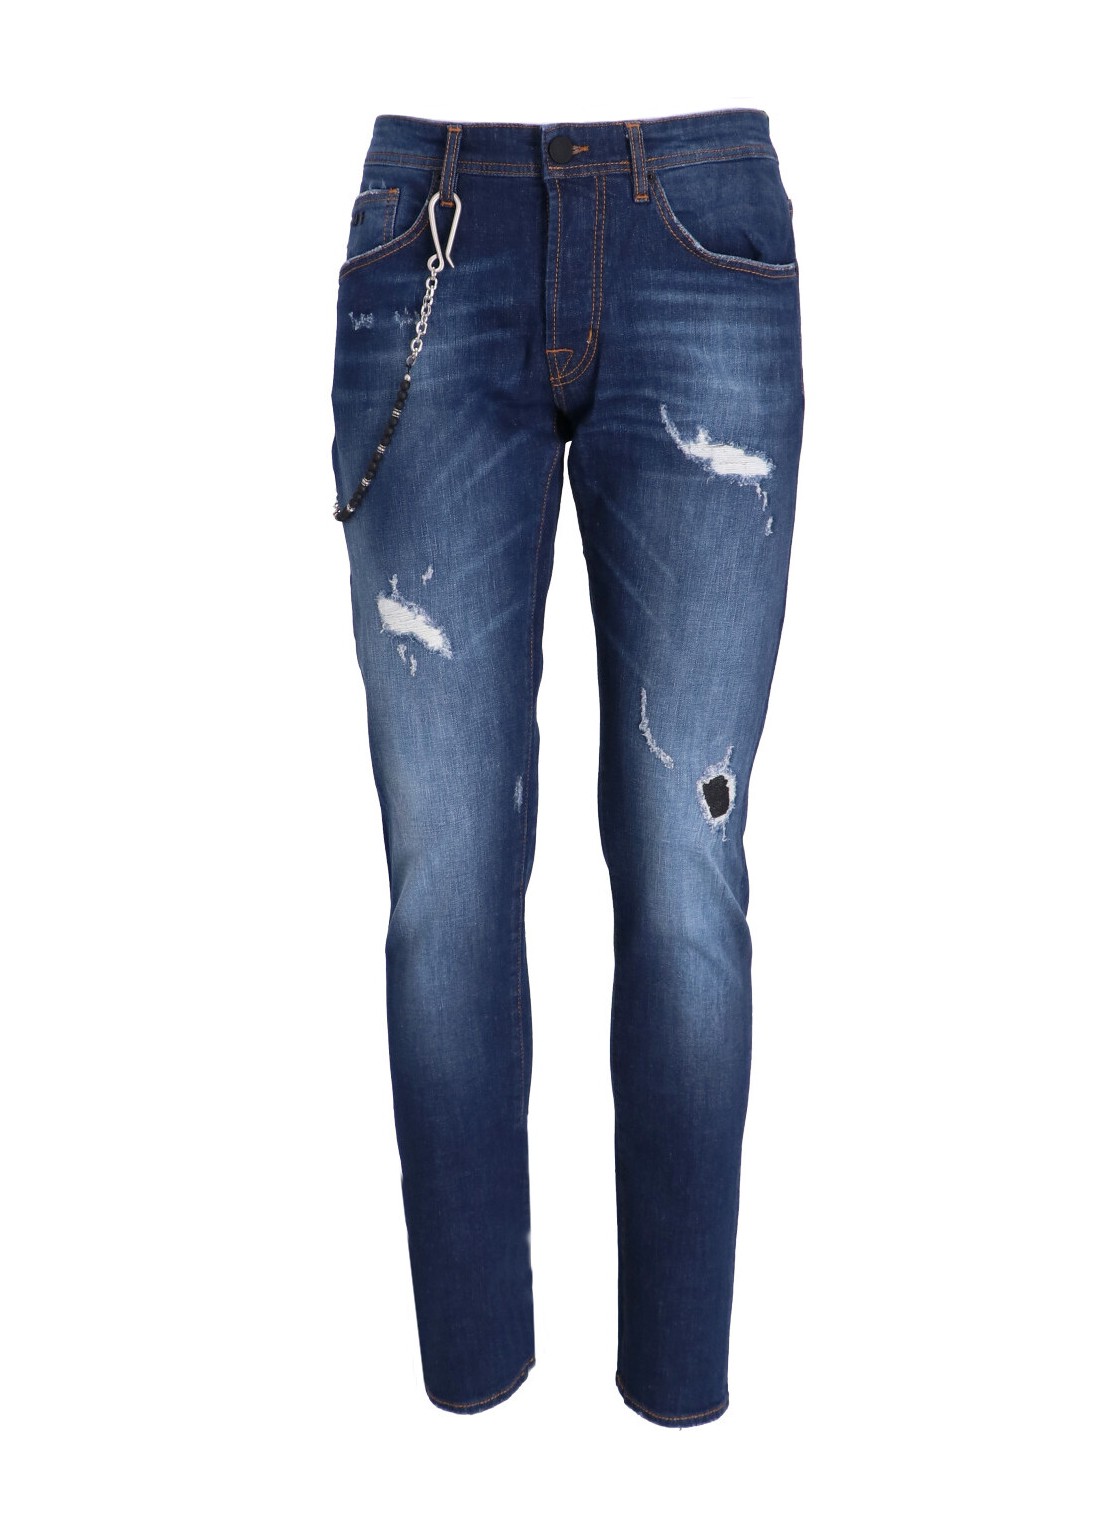 Pantalon jeans tramarossa denim man 1980 1980 23150 talla Azul
 